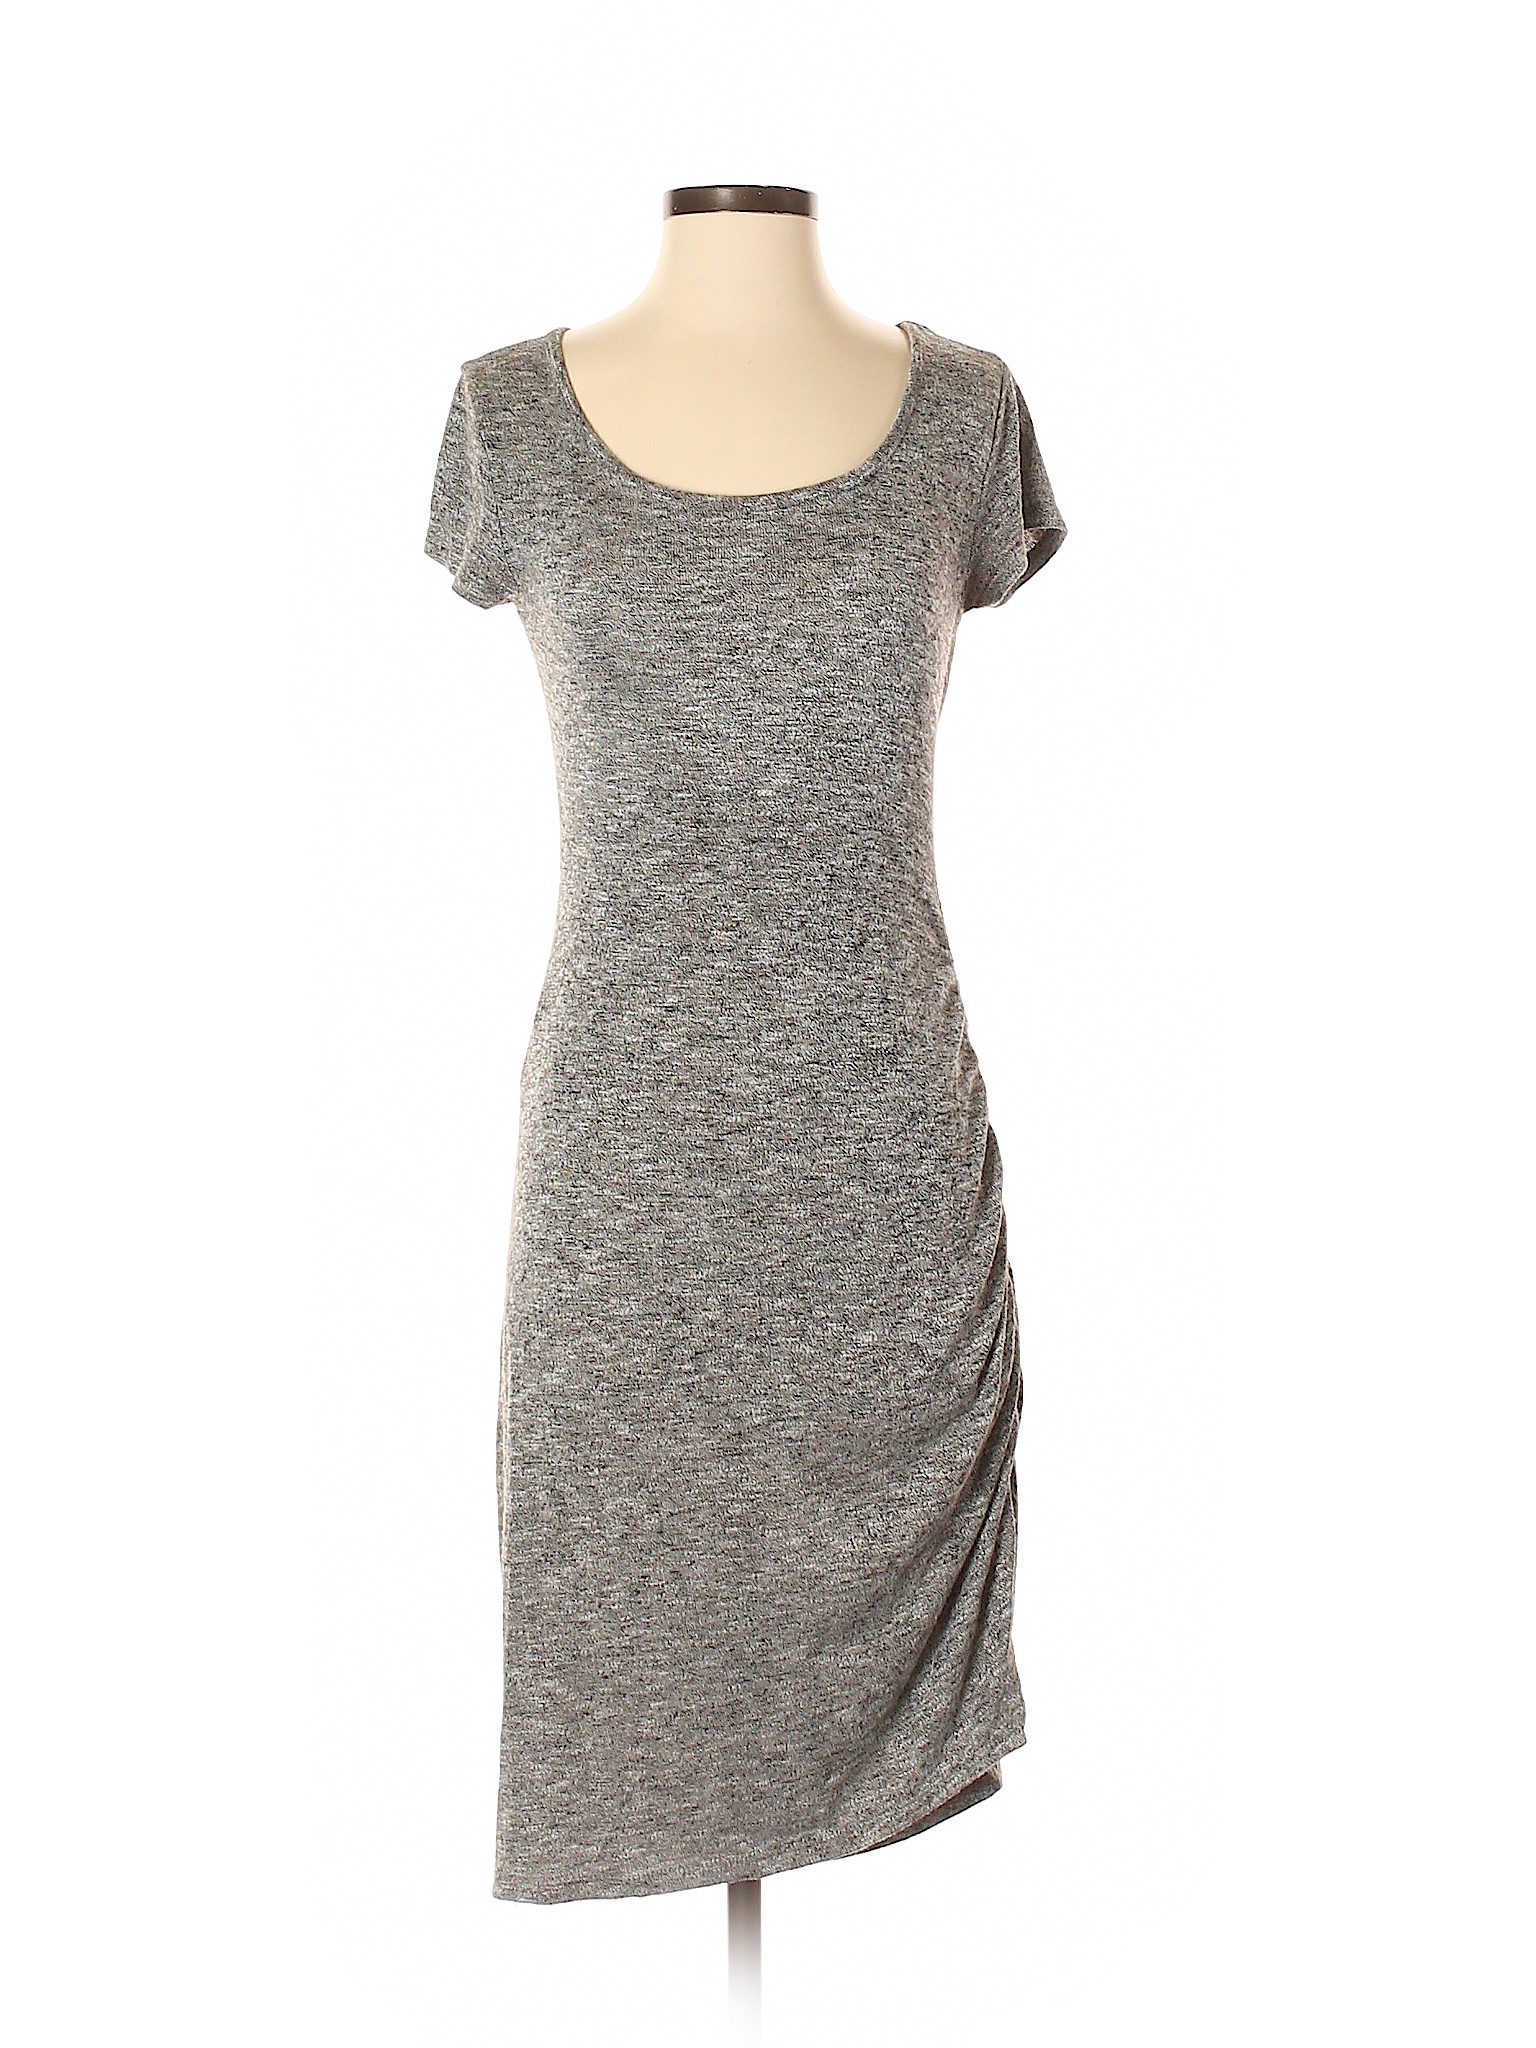 Mossimo Women Gray Casual Dress Xs | eBay